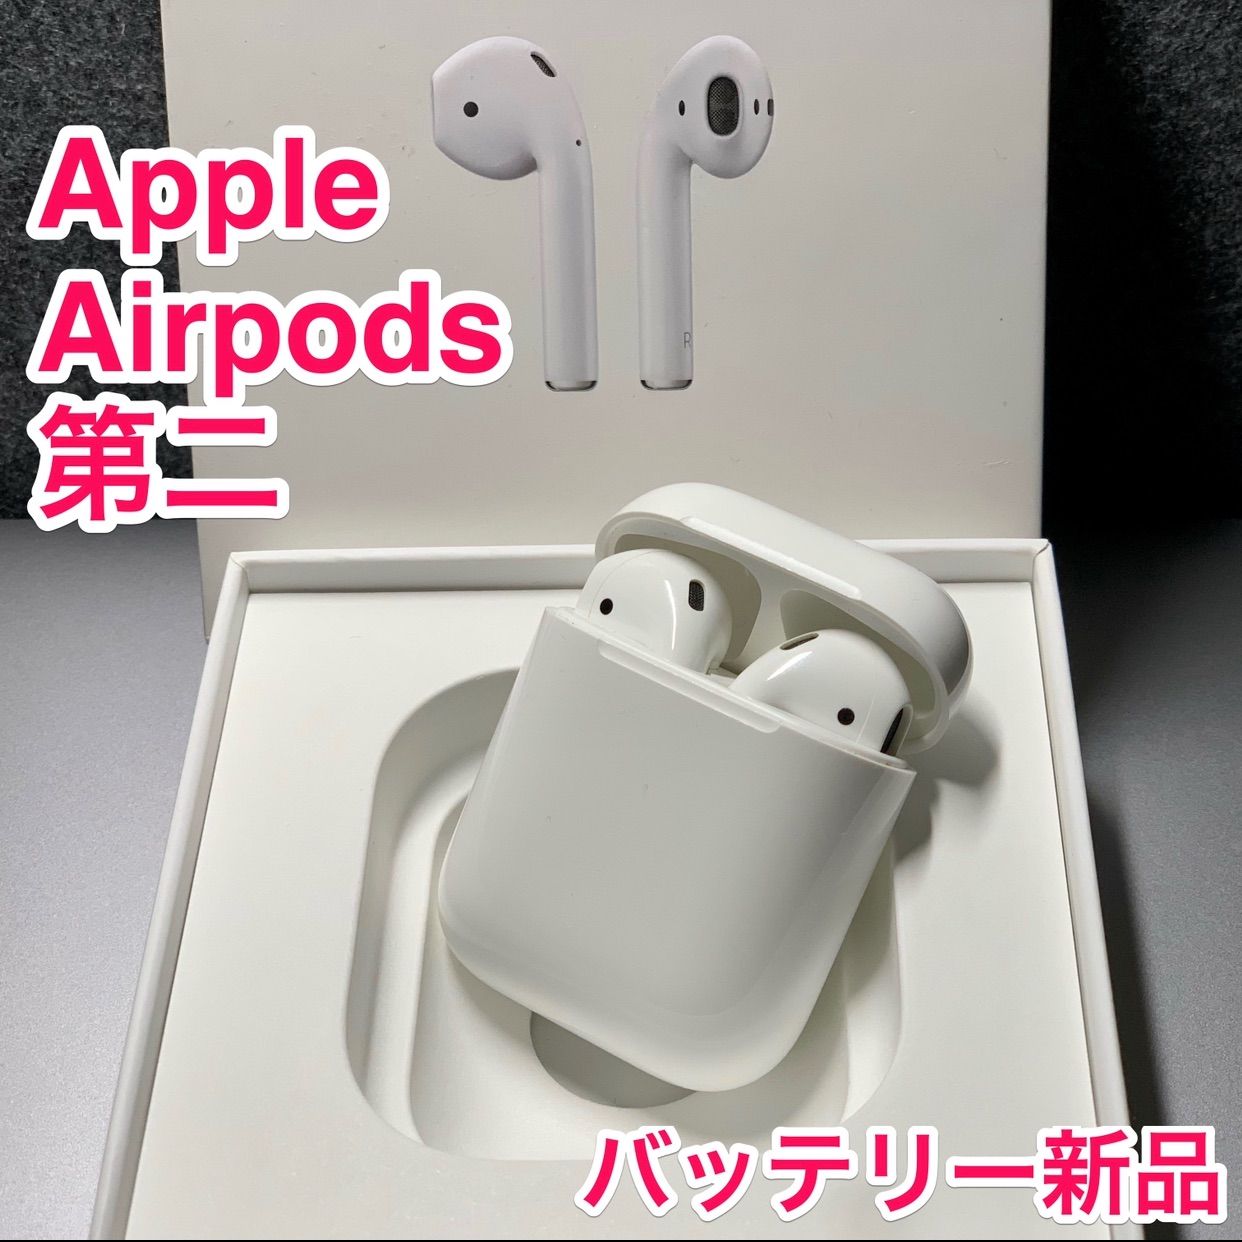 Apple Airpods 第2世代 エアポッズ アップル - イヤホン